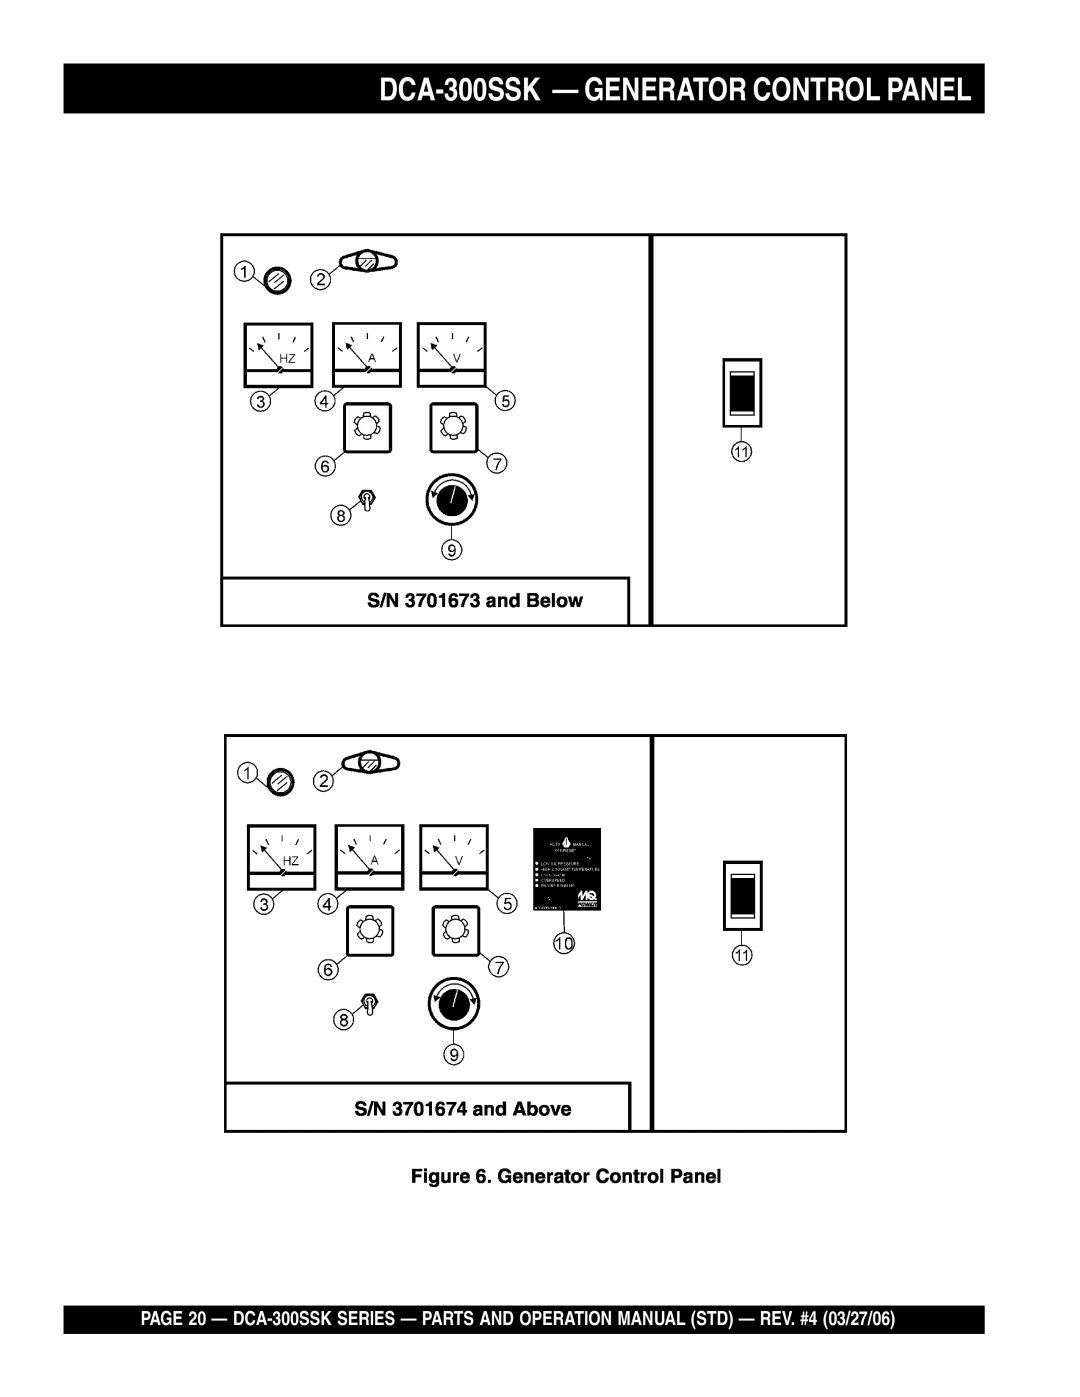 Multiquip DCA-300SSK - GENERATOR CONTROL PANEL, S/N 3701673 and Below S/N 3701674 and Above, Generator Control Panel 